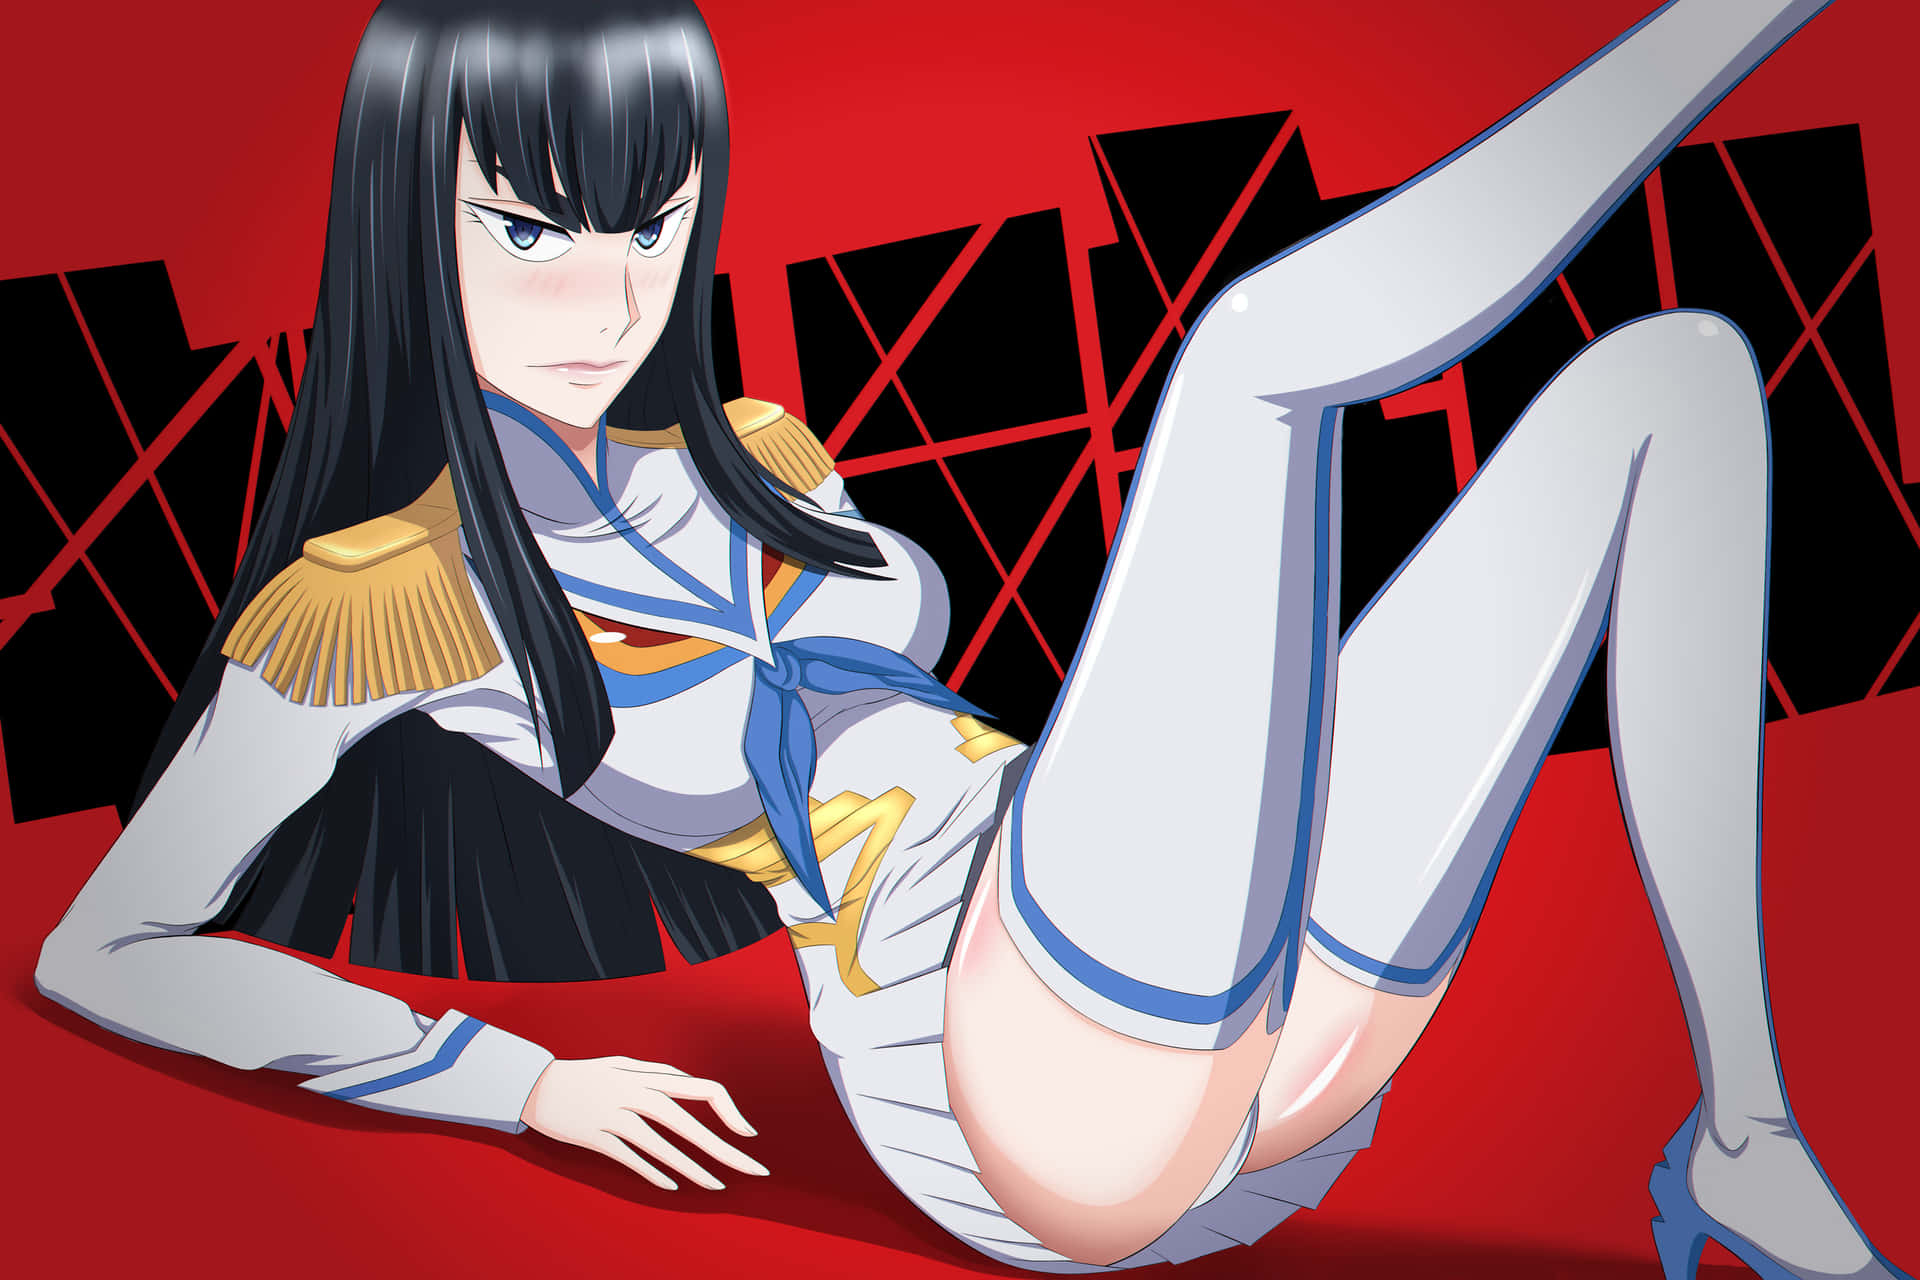 Satsuki Kiryuin standing in battle pose, ready to take on her enemies. Wallpaper